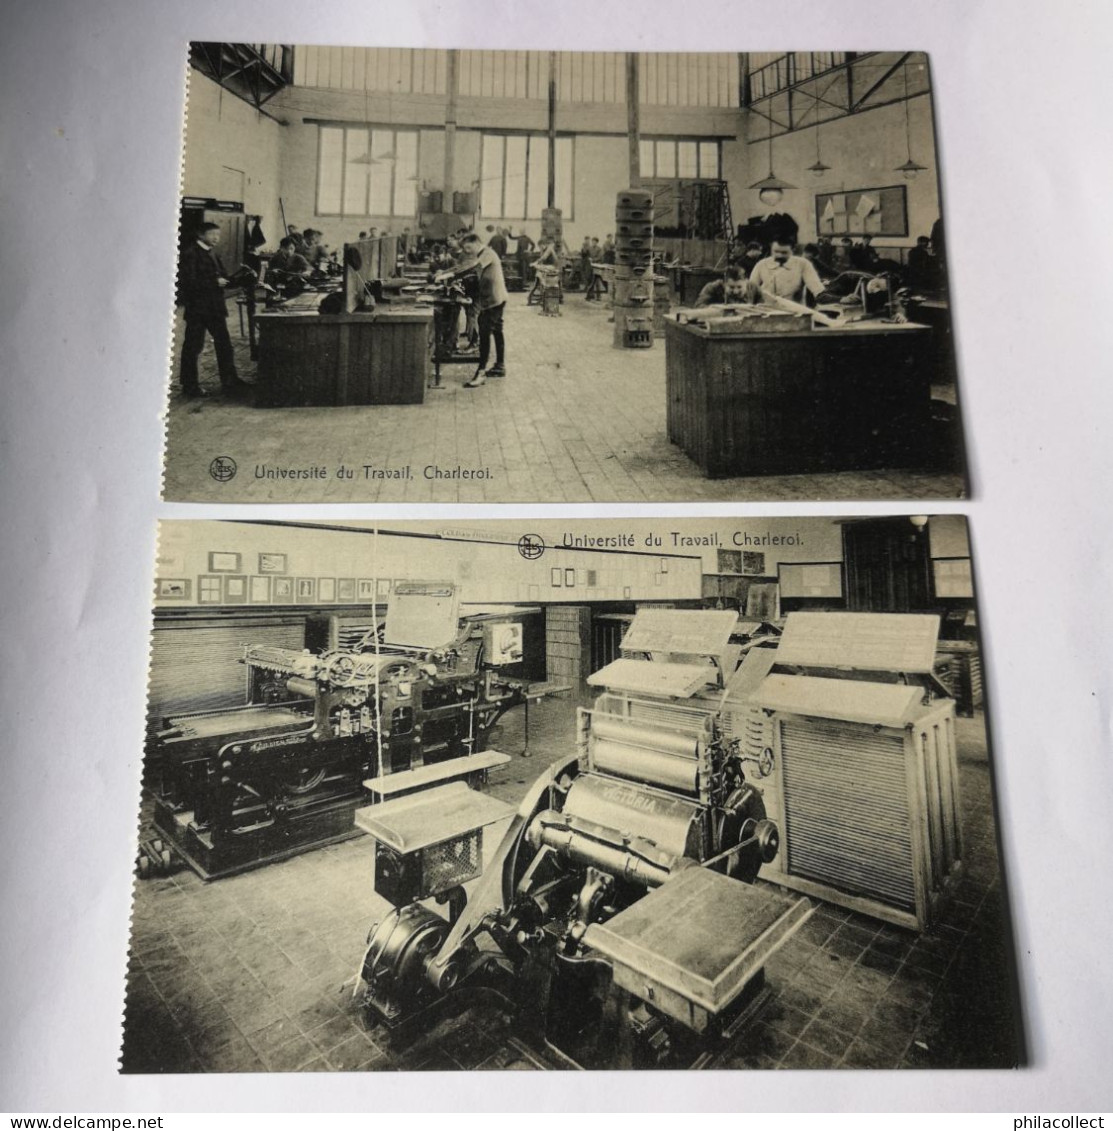 Charleroi // Collection 106 Kaarten tussen 1903 - 1950 alles afgebeeld